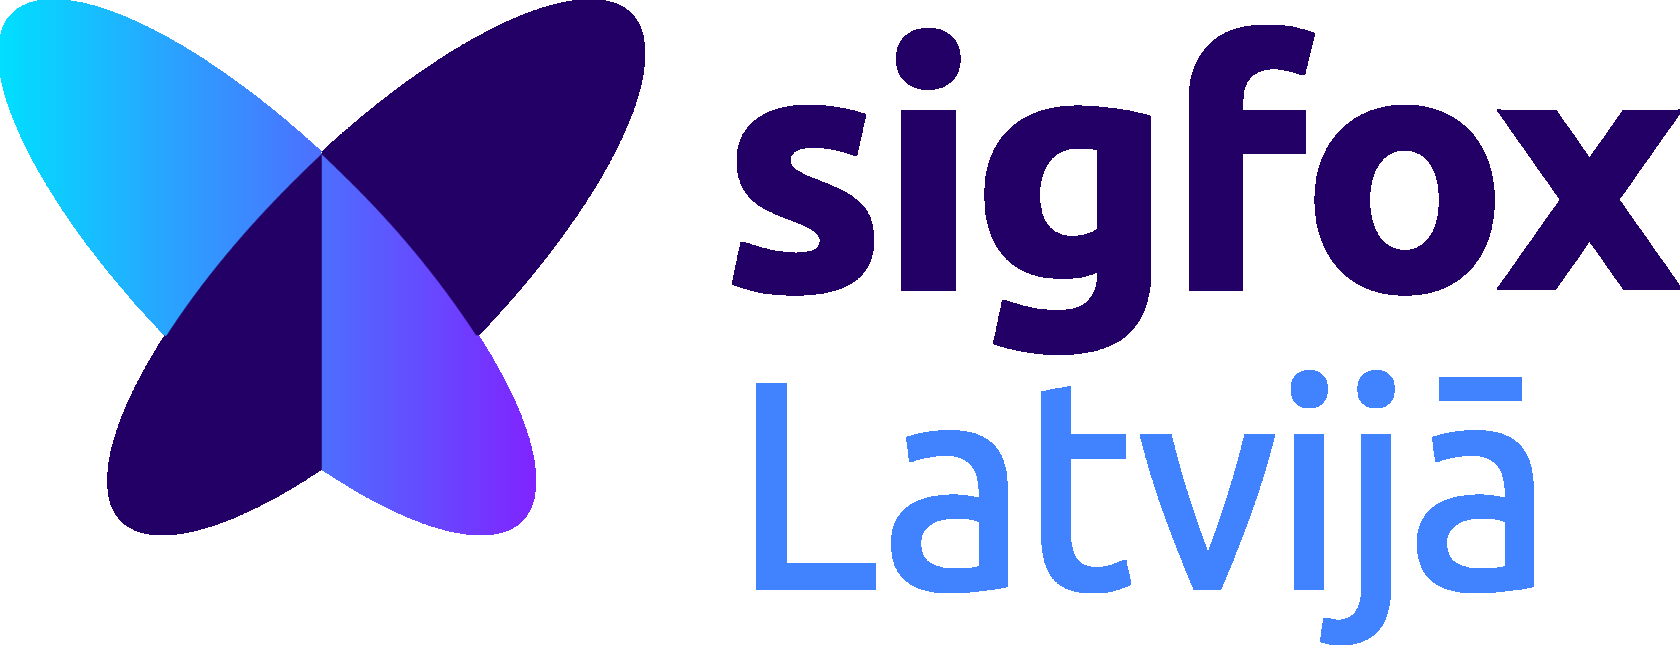 Sigfox Latvia